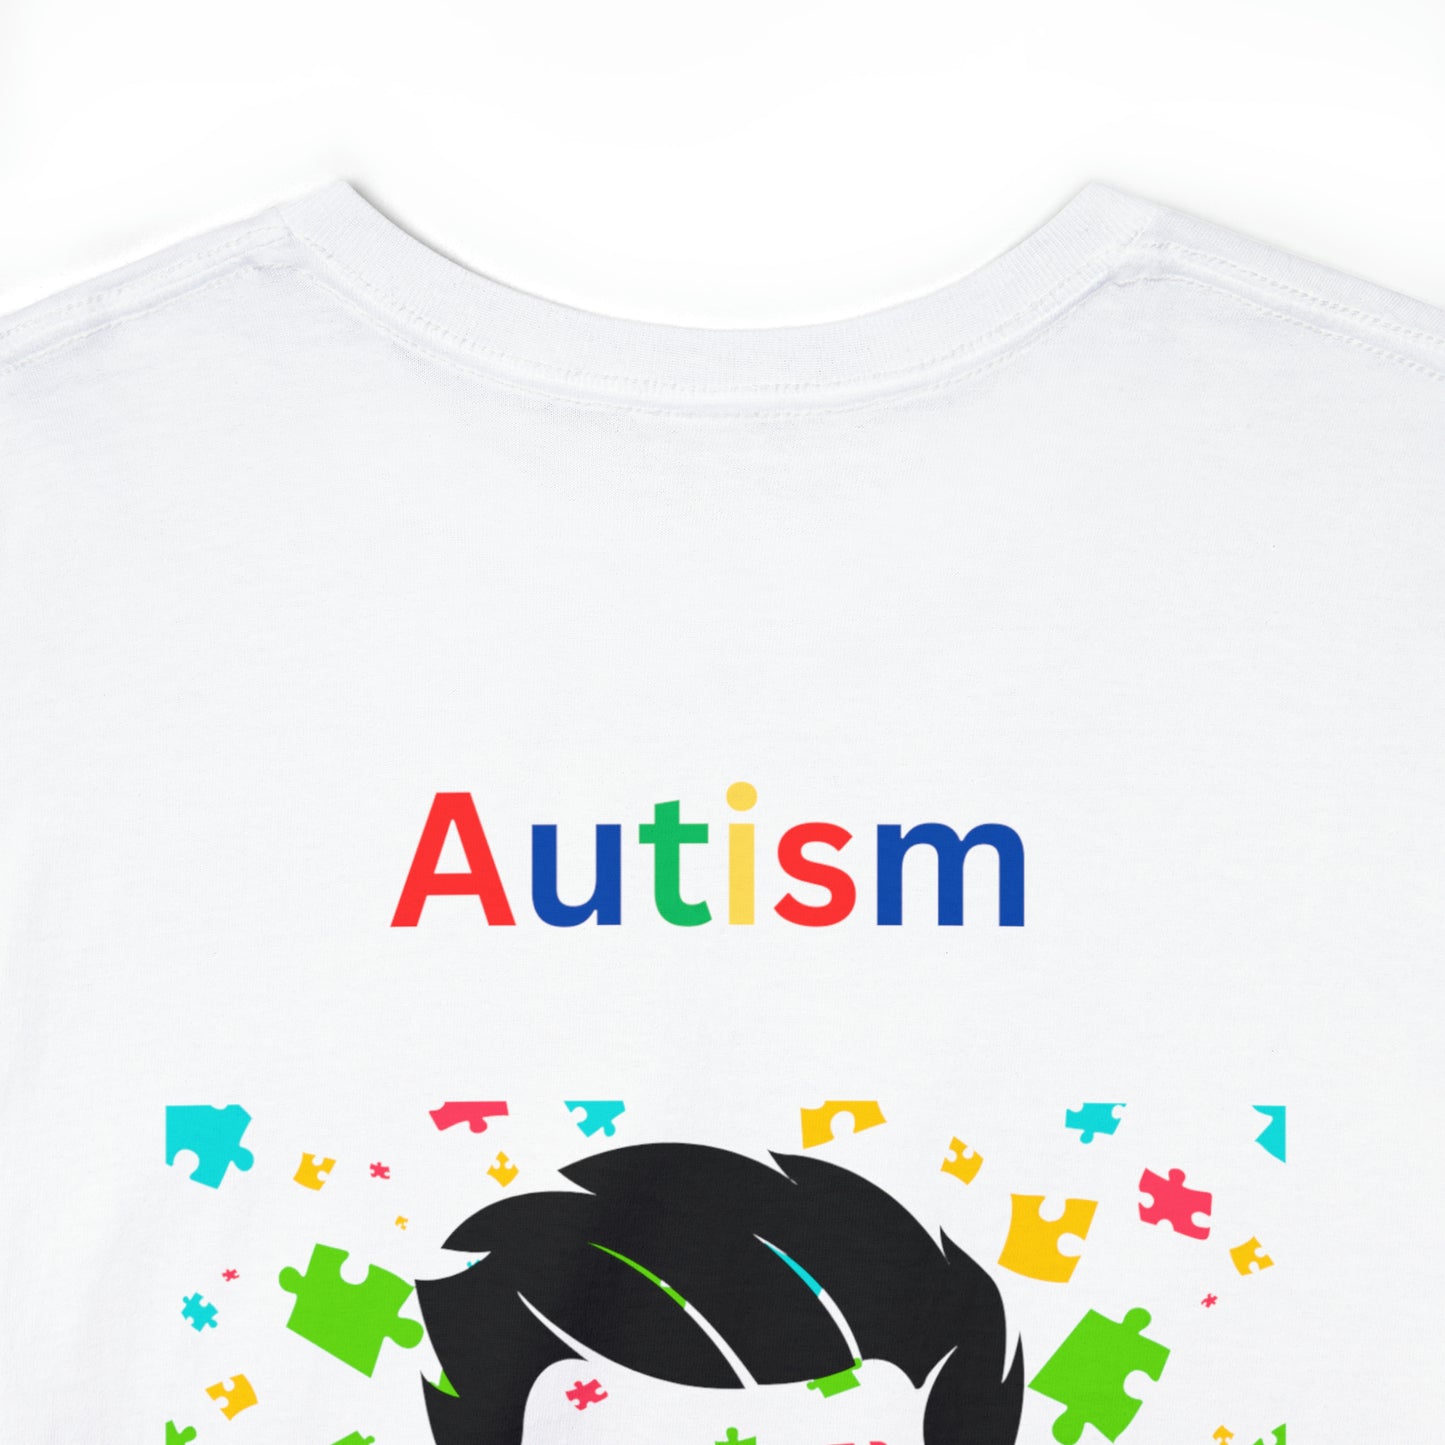 Autism Dad T-shirt